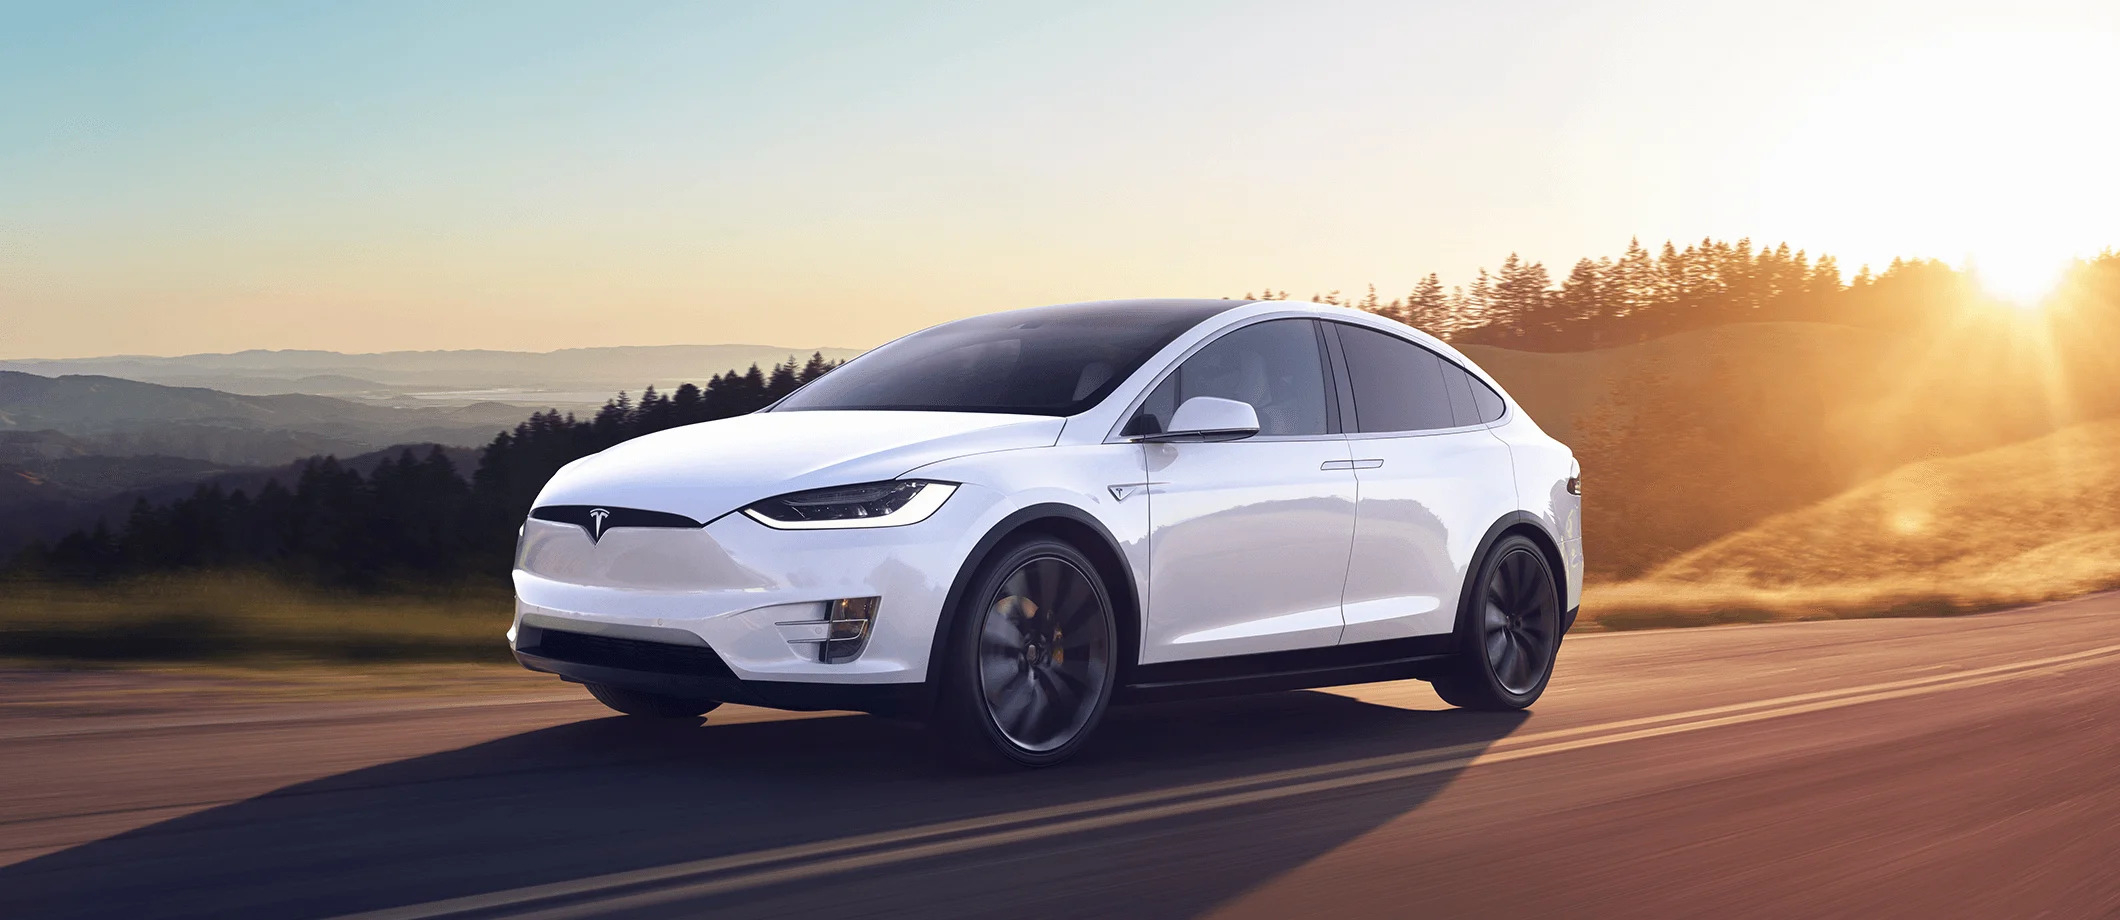 Tesla Model X private lease